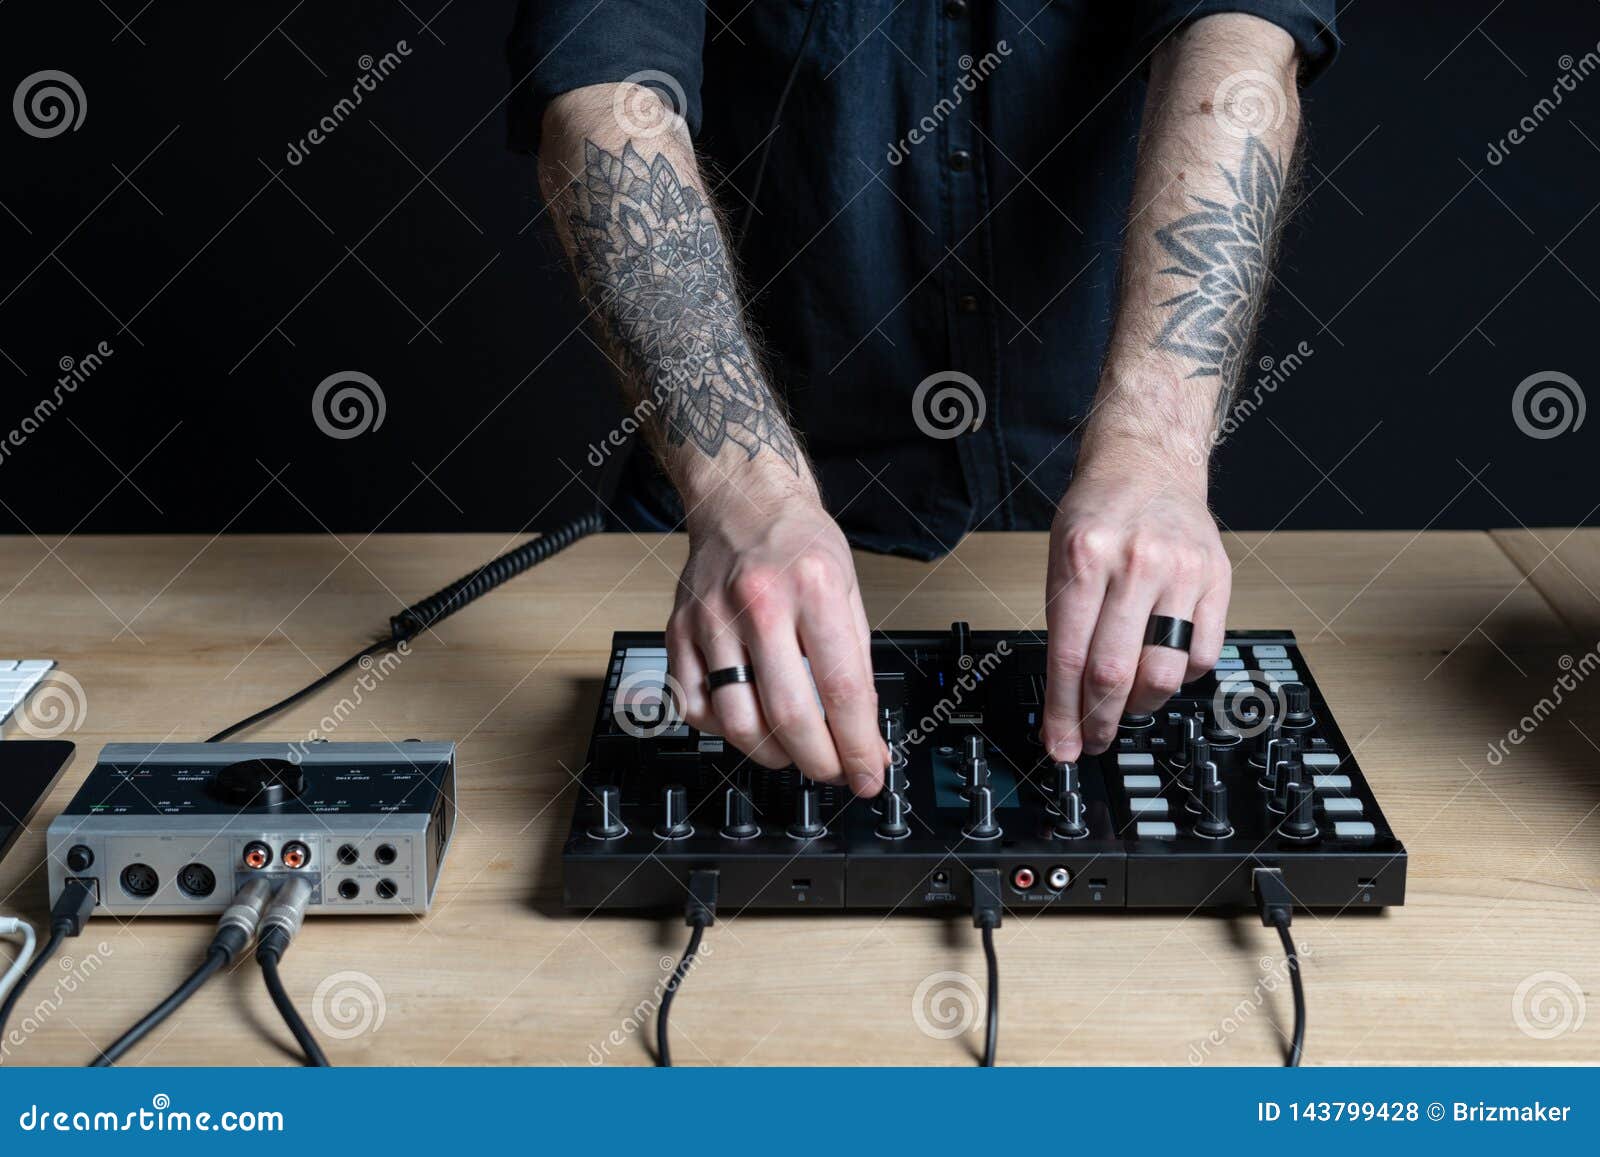 Dj Man Creates Electronic Music in the Studio Stock Image - Image of mixer,  play: 143799483